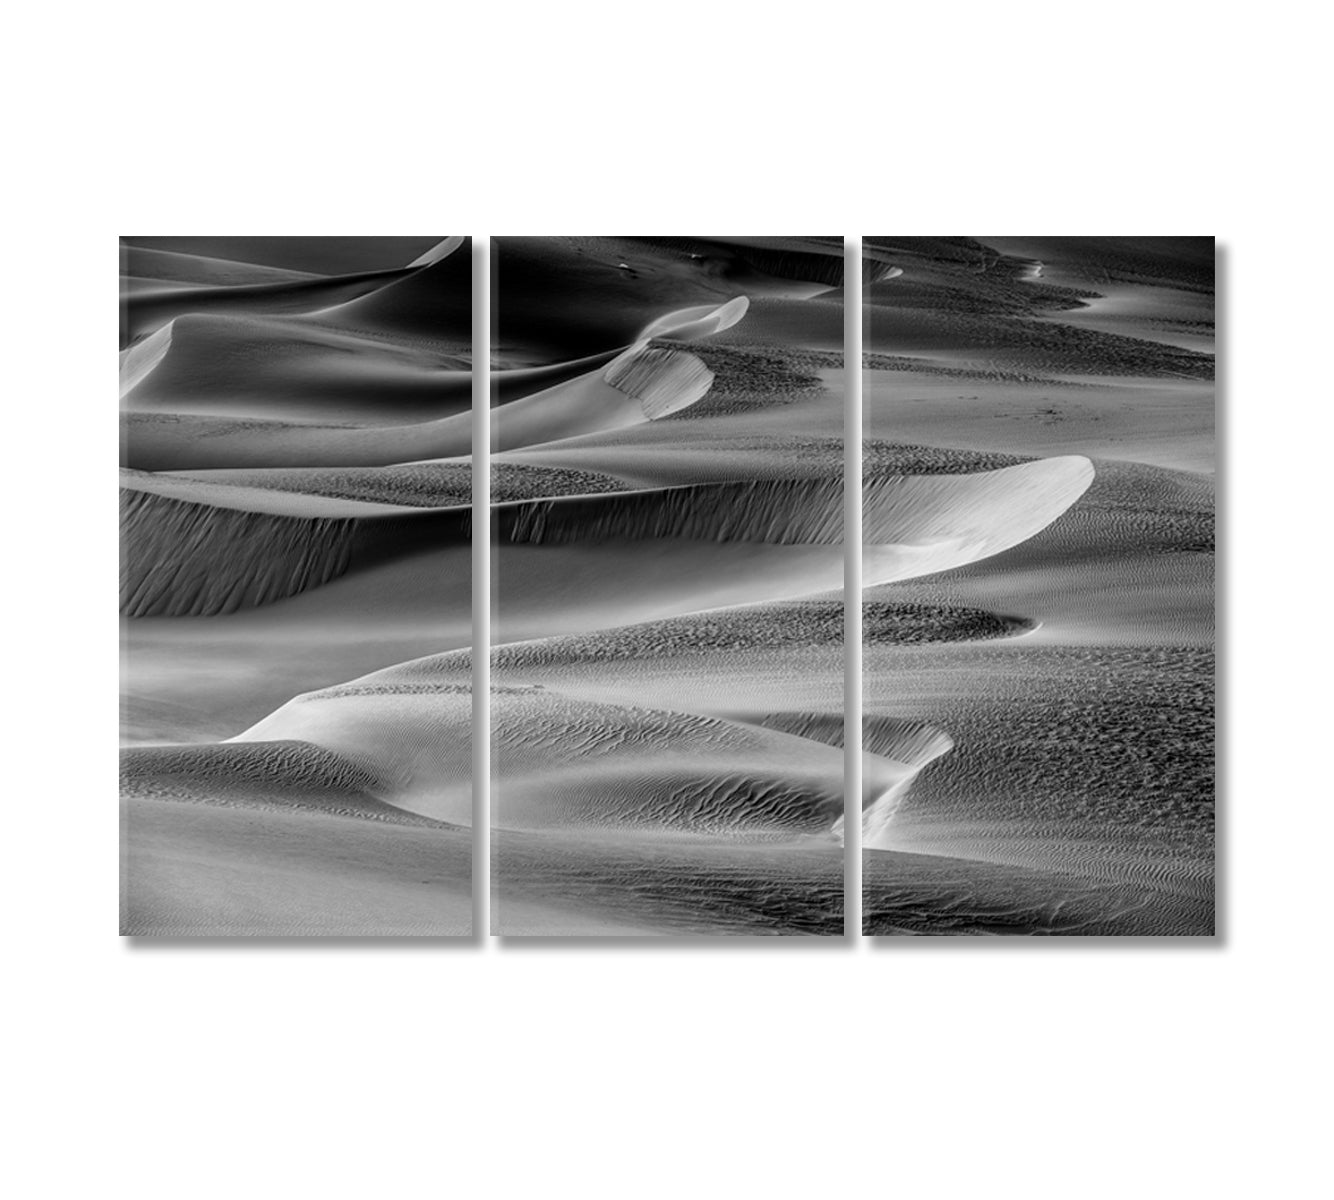 Desert in Black and White Canvas Print-Canvas Print-CetArt-3 Panels-36x24 inches-CetArt